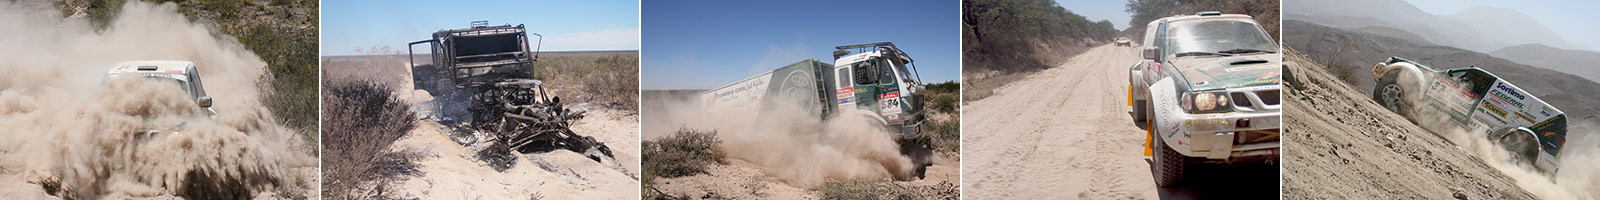 Dakar 2009. Una victoria.